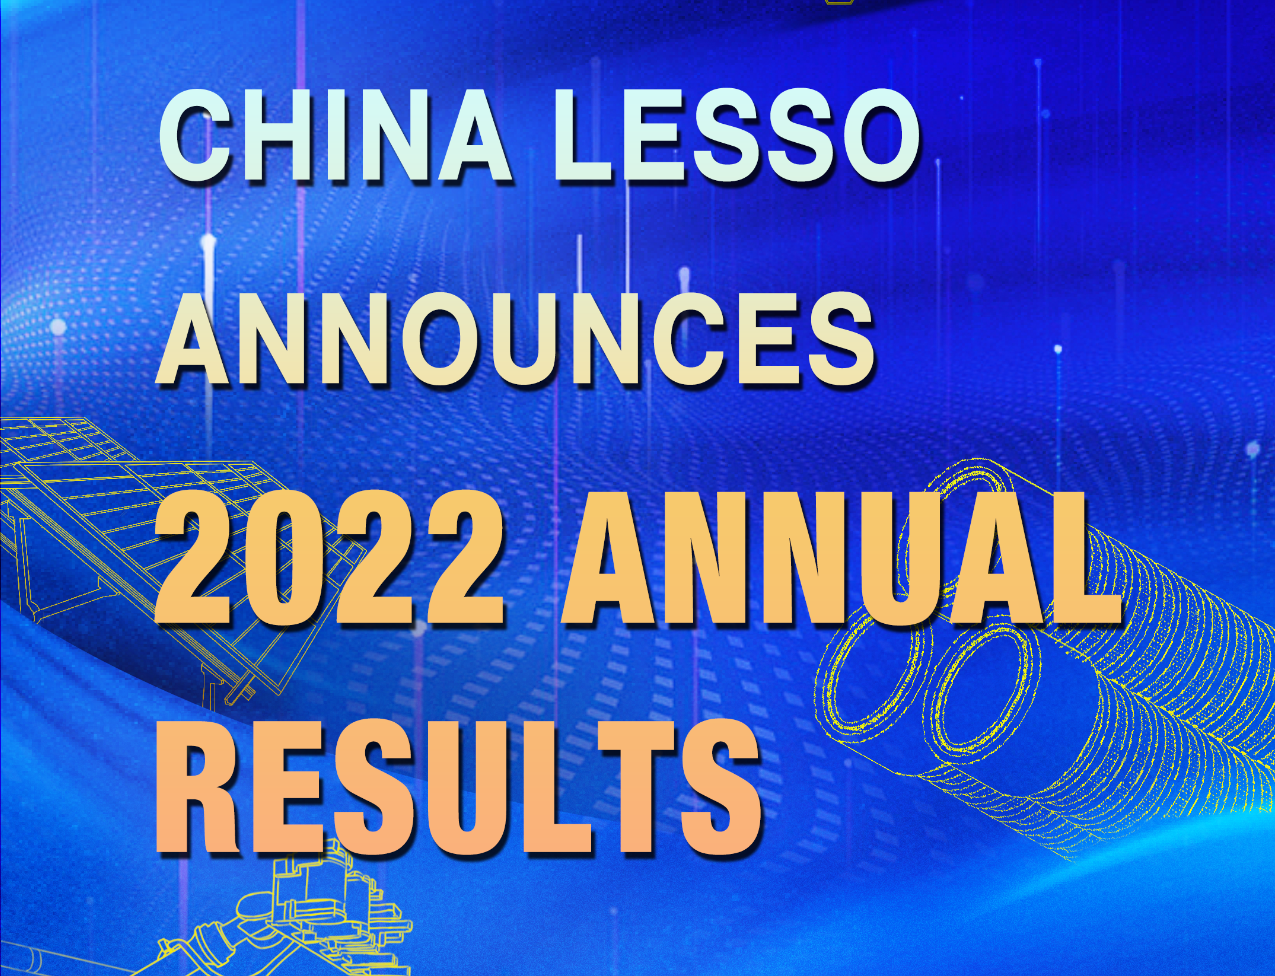 China Lesso Announces 2022 Annual Results